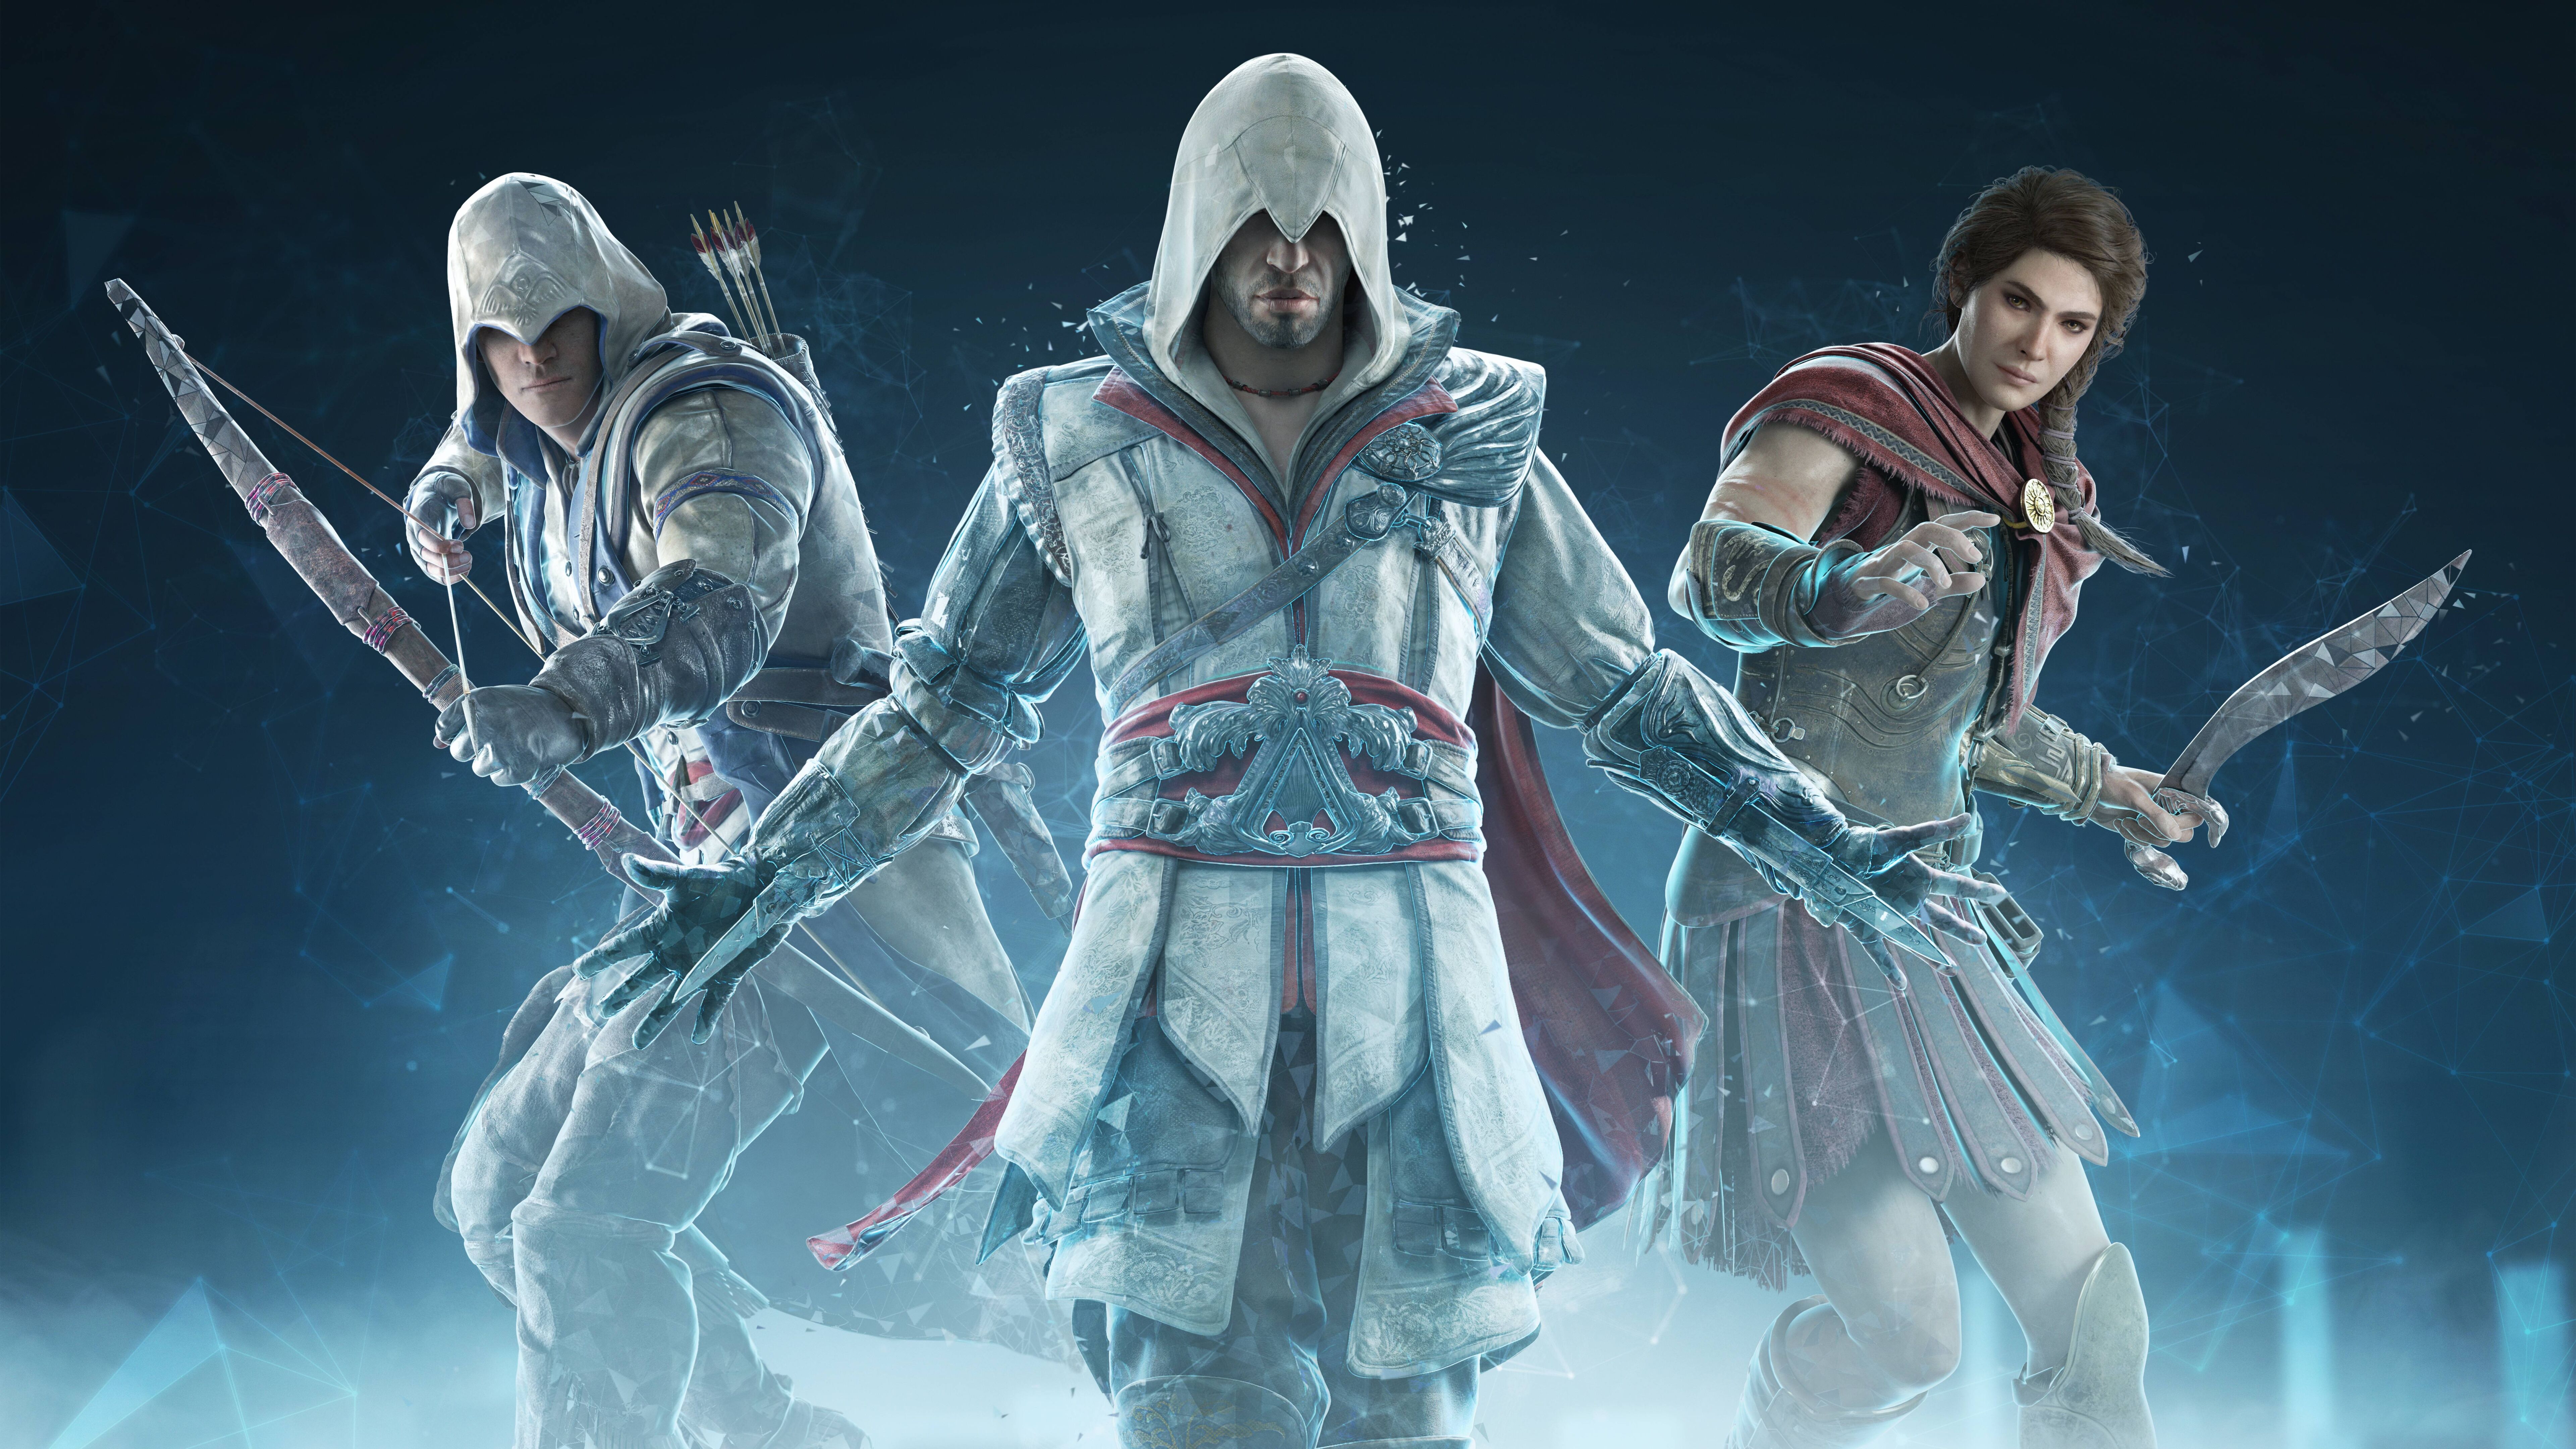 Assassin's Creed Nexus VR debut trailer, details, and screenshots - Gematsu